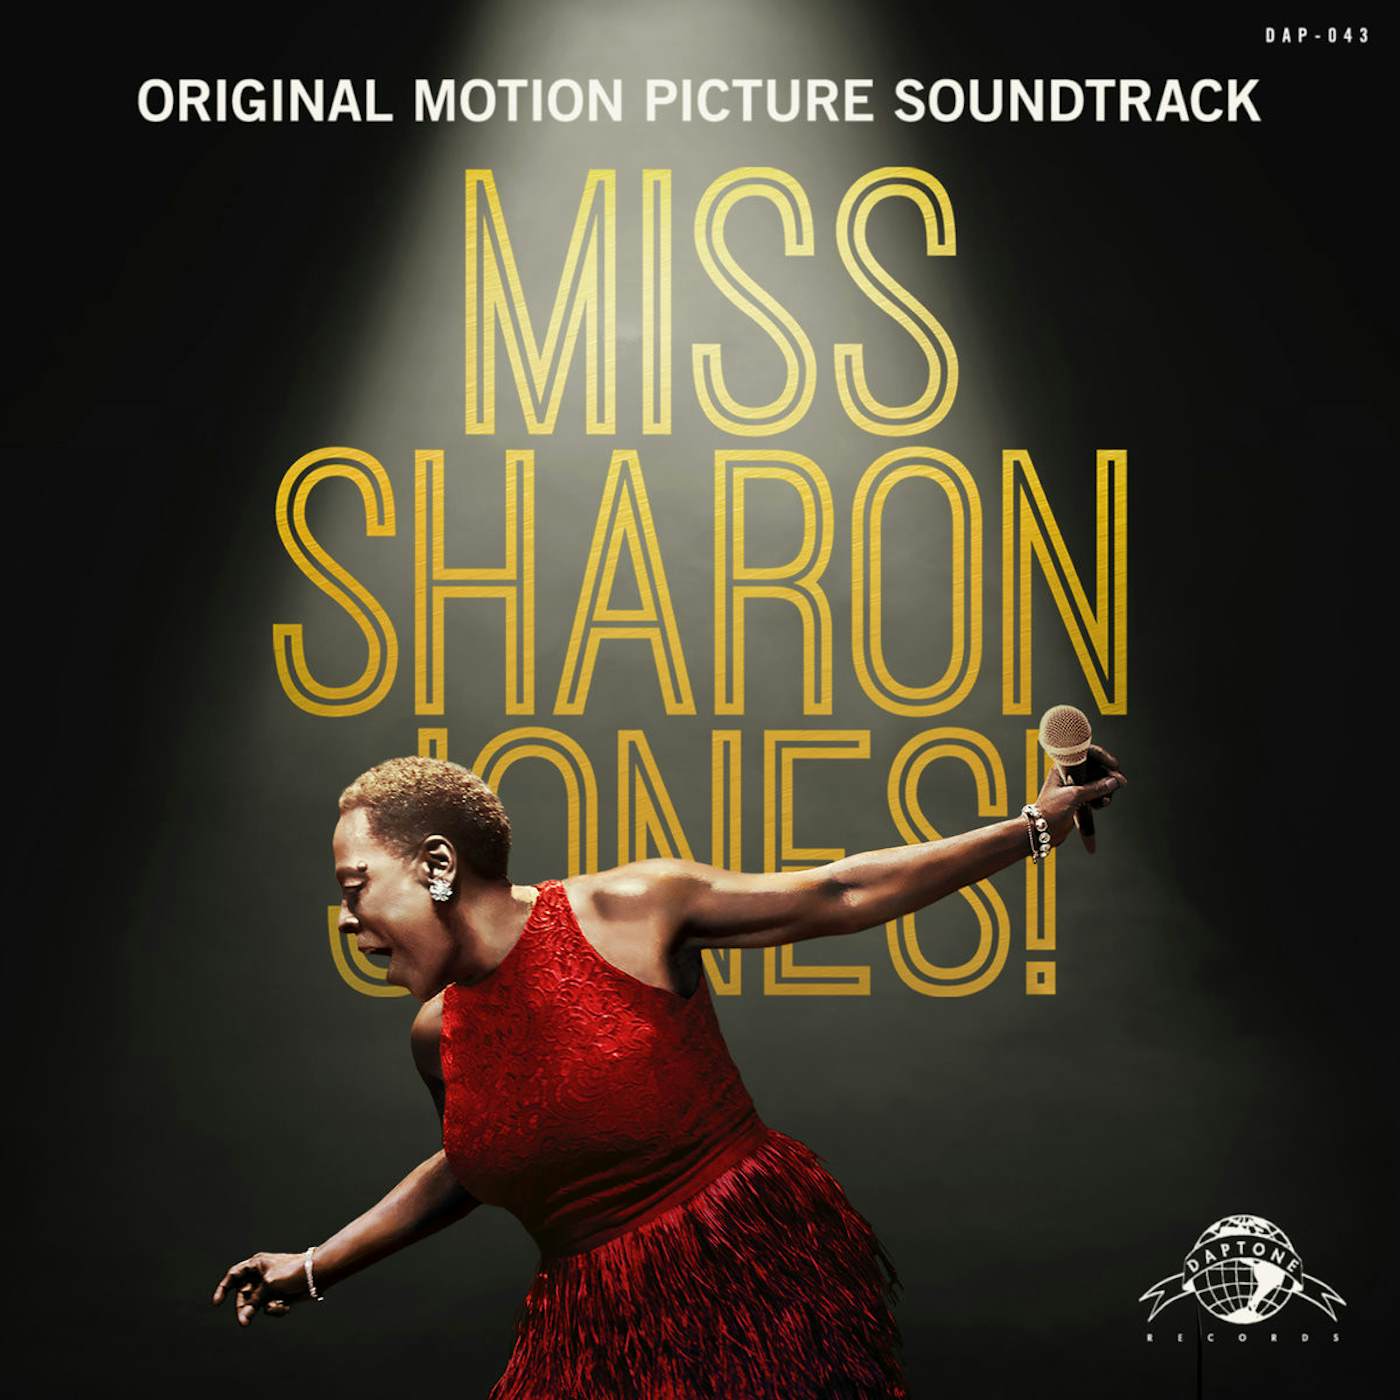 MISS SHARON JONES - Original Soundtrack Vinyl Record